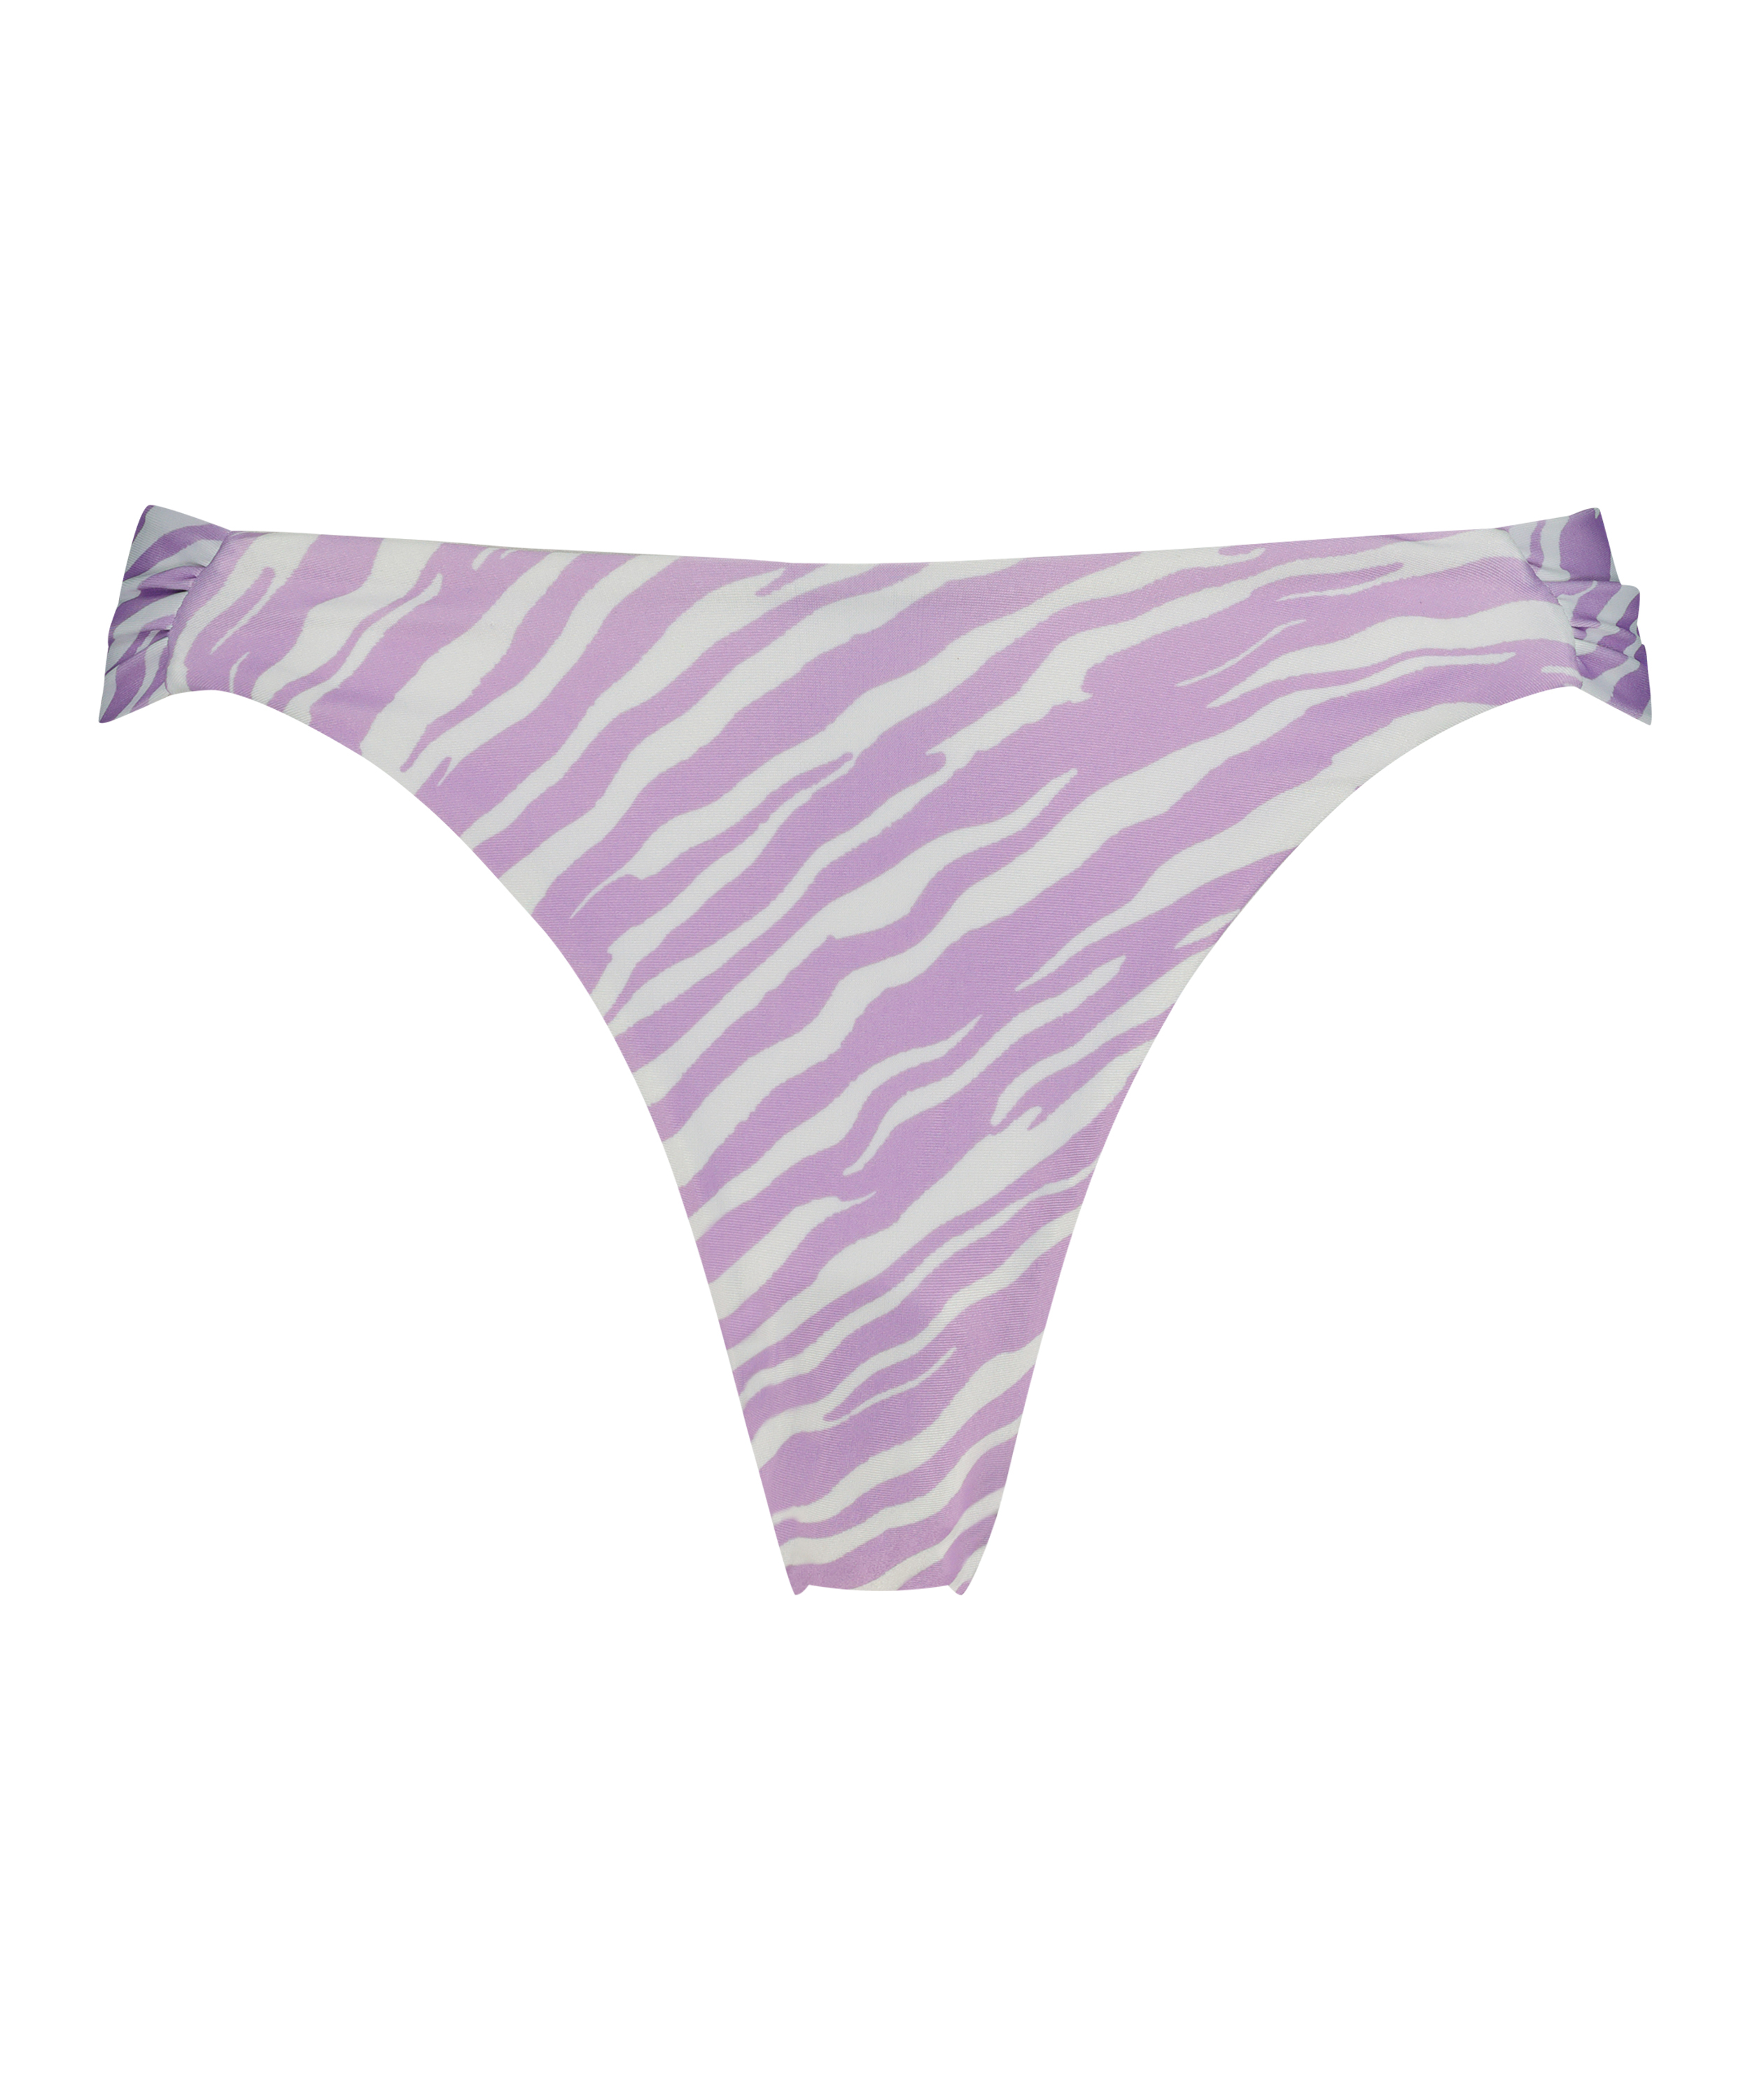 Zebra bikini bottoms, Purple, main